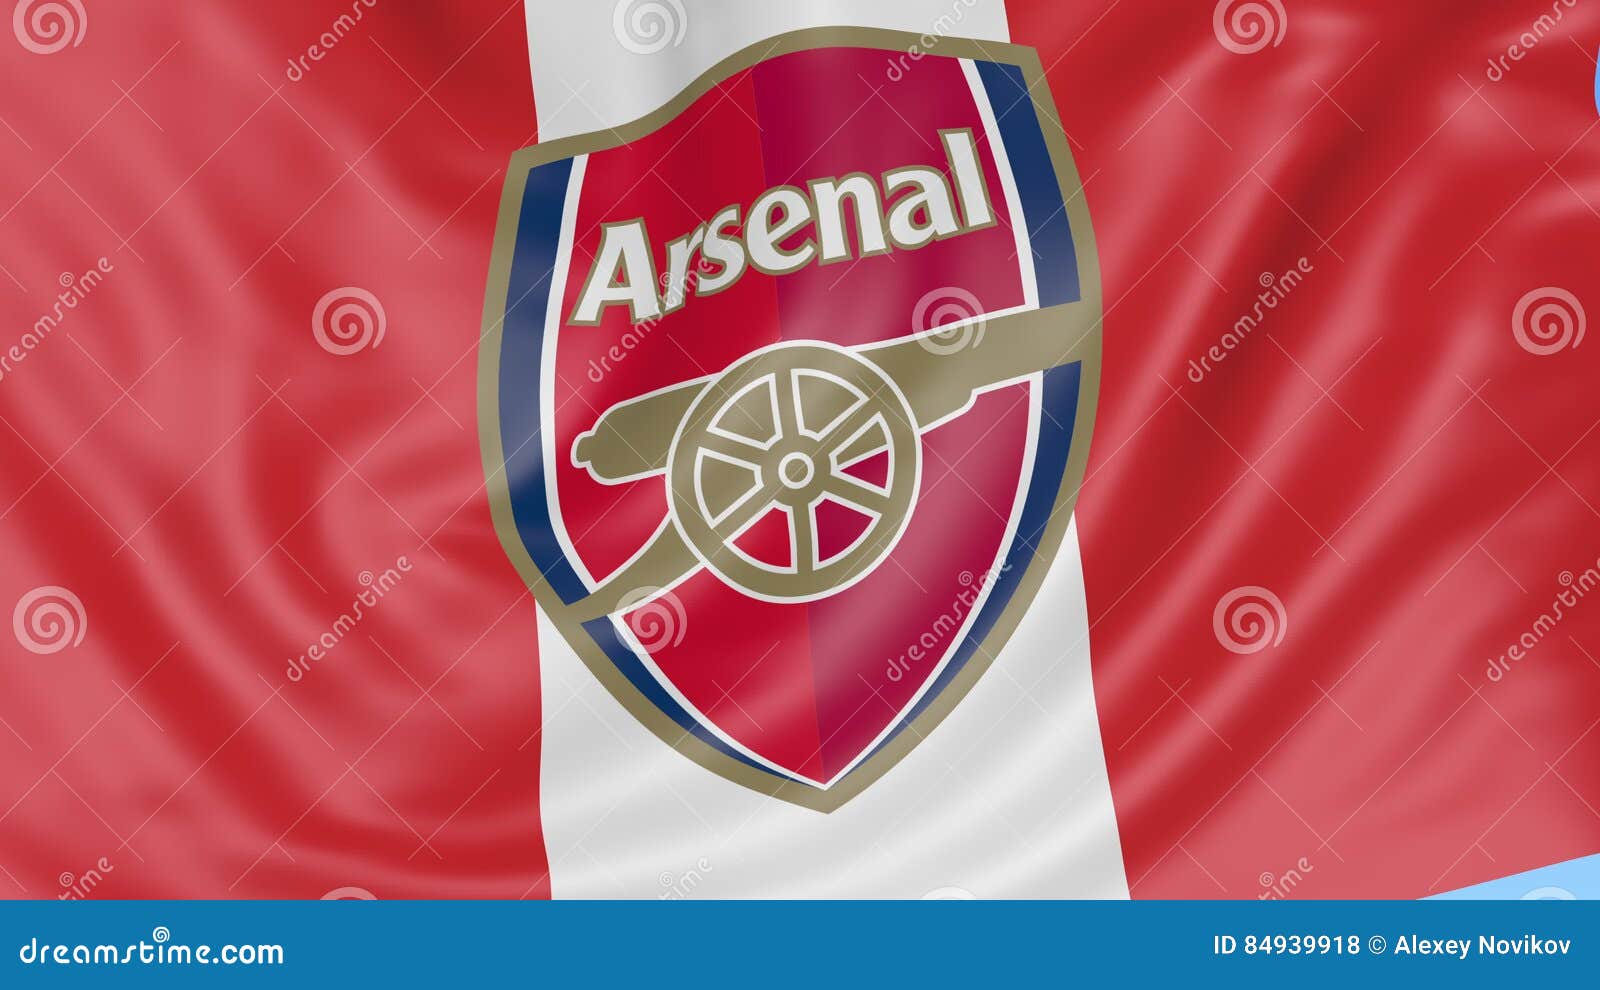 Close Up Of Waving Flag With Arsenal Fc Football Club Logo Seamless